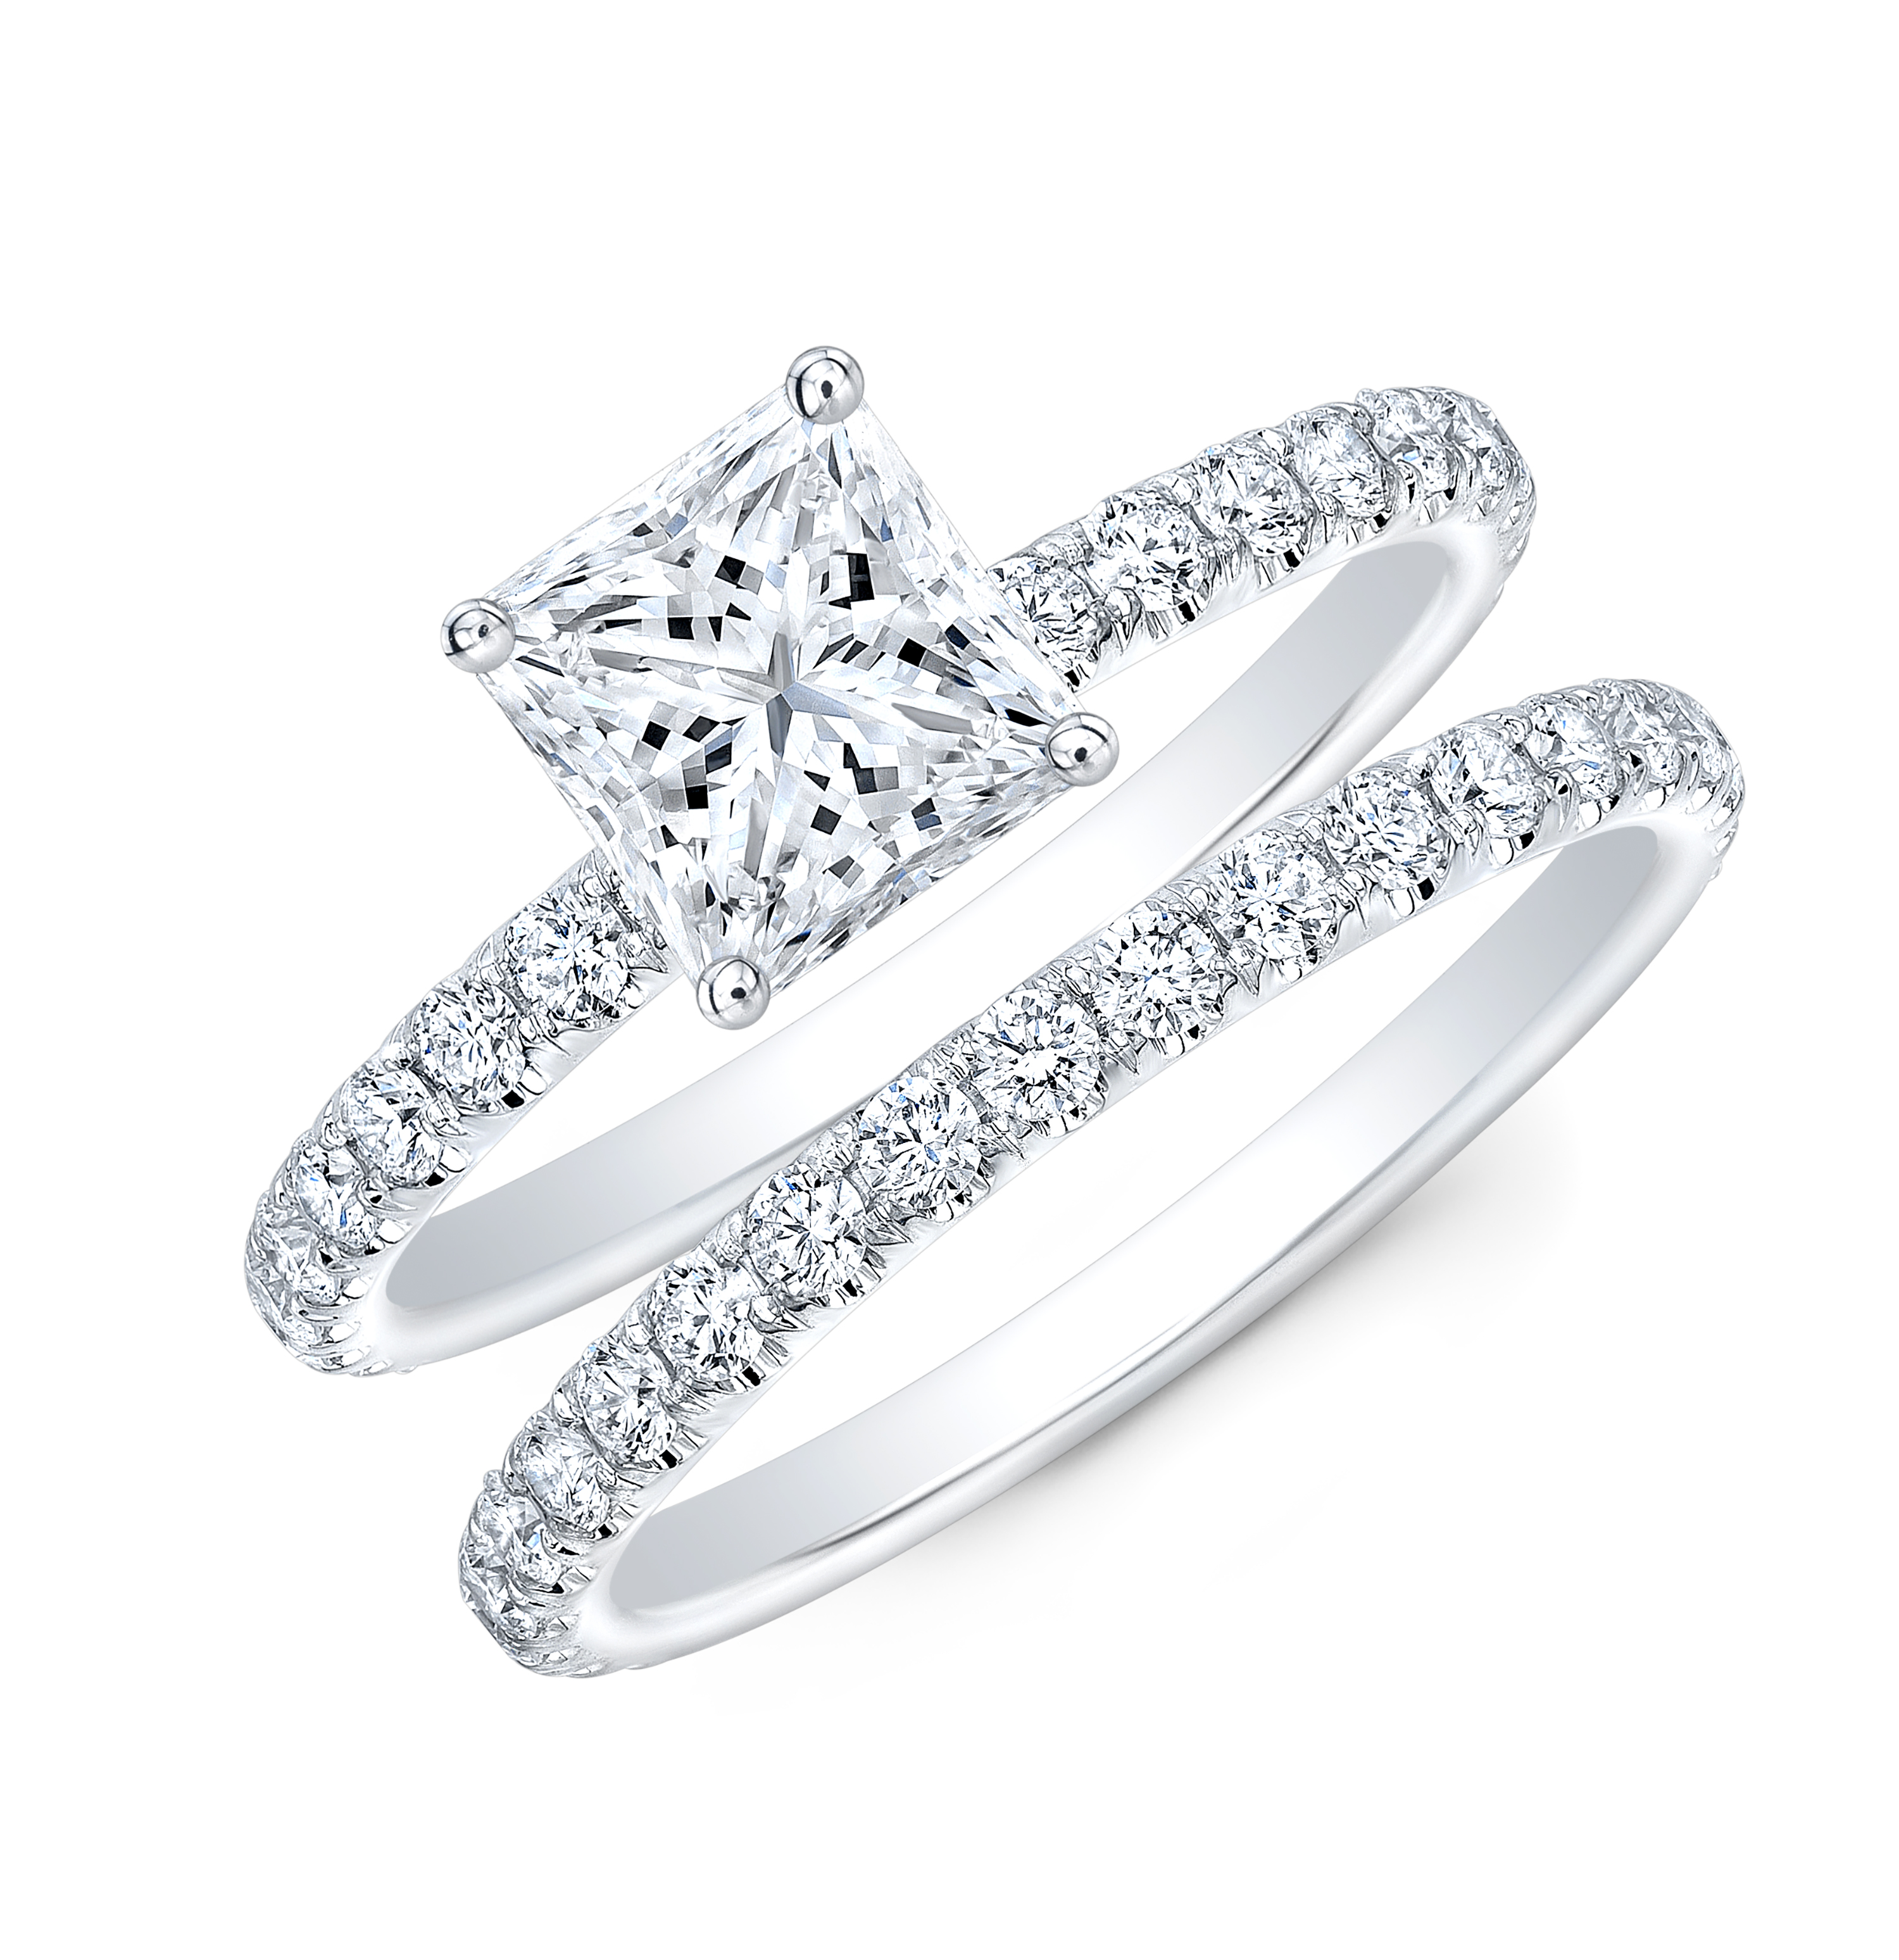 Buy Lab Grown Diamond Engagement Ring Indigo Vintage Engagement Ring 1  carat Oval Shape Certified Diamond at Amazon.in